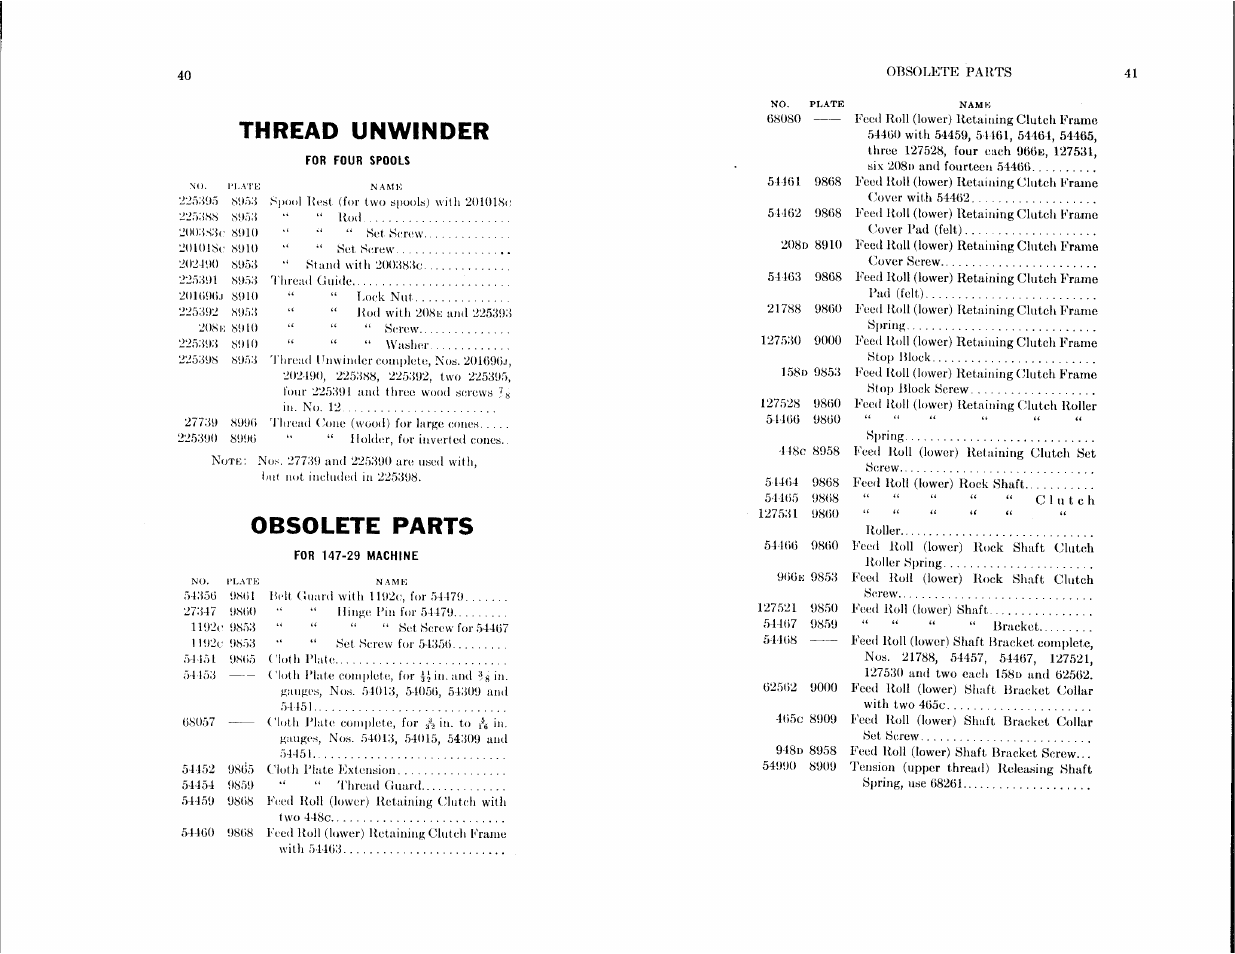 Thread unwinder, Obsolete parts | SINGER 147-29 User Manual | Page 20 / 53